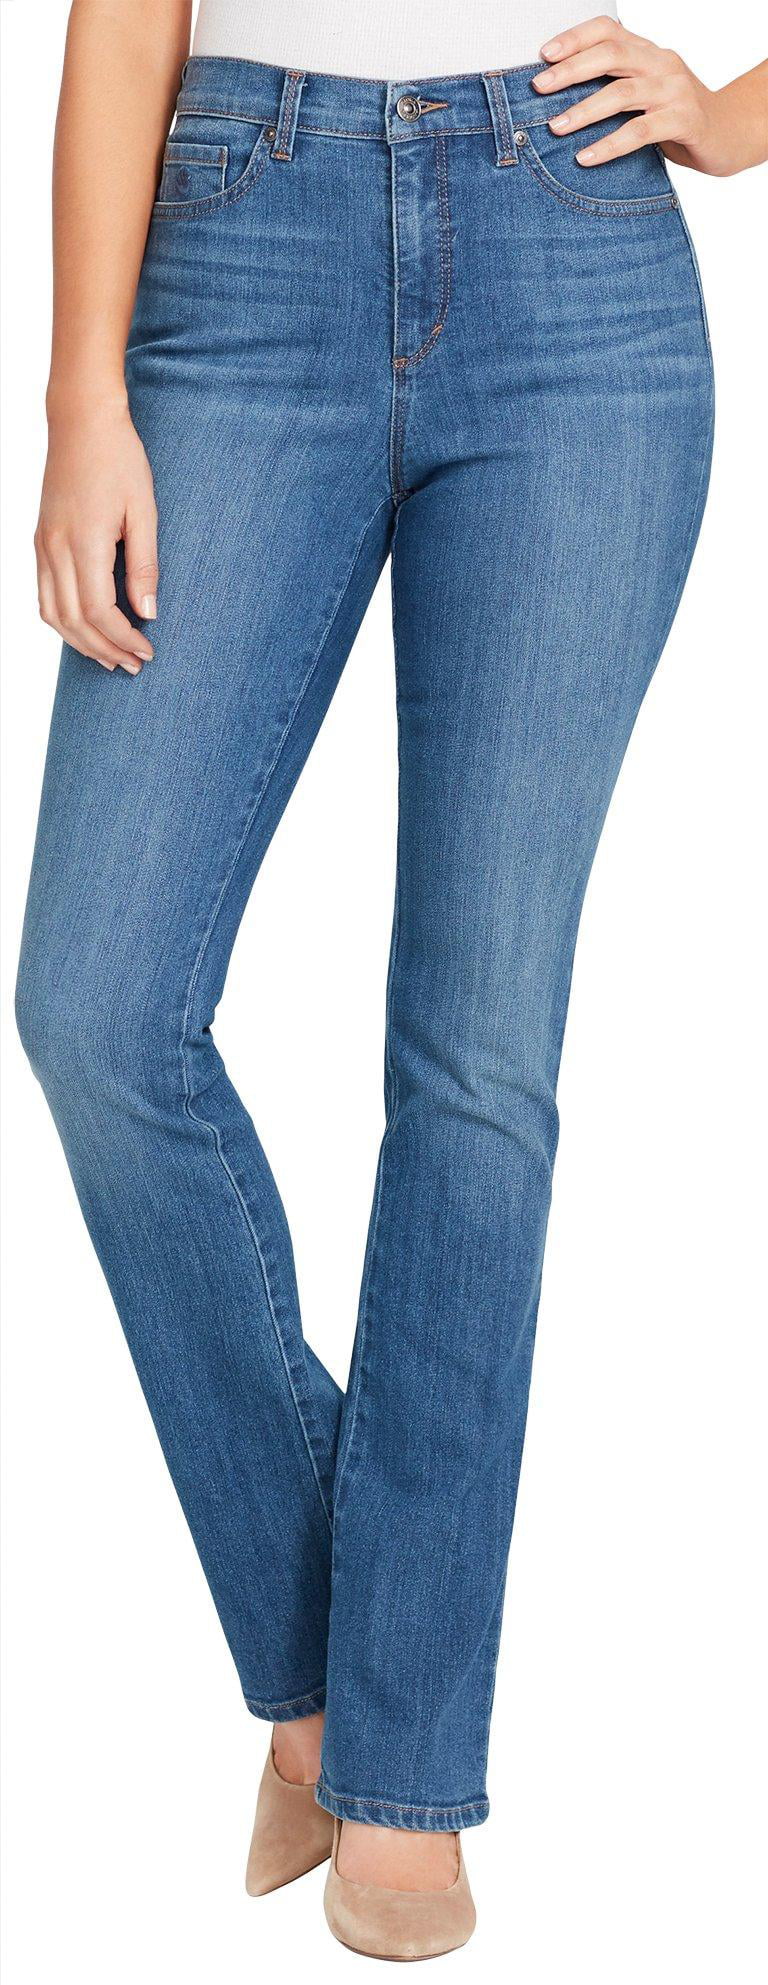 gloria vanderbilt bootcut jeans